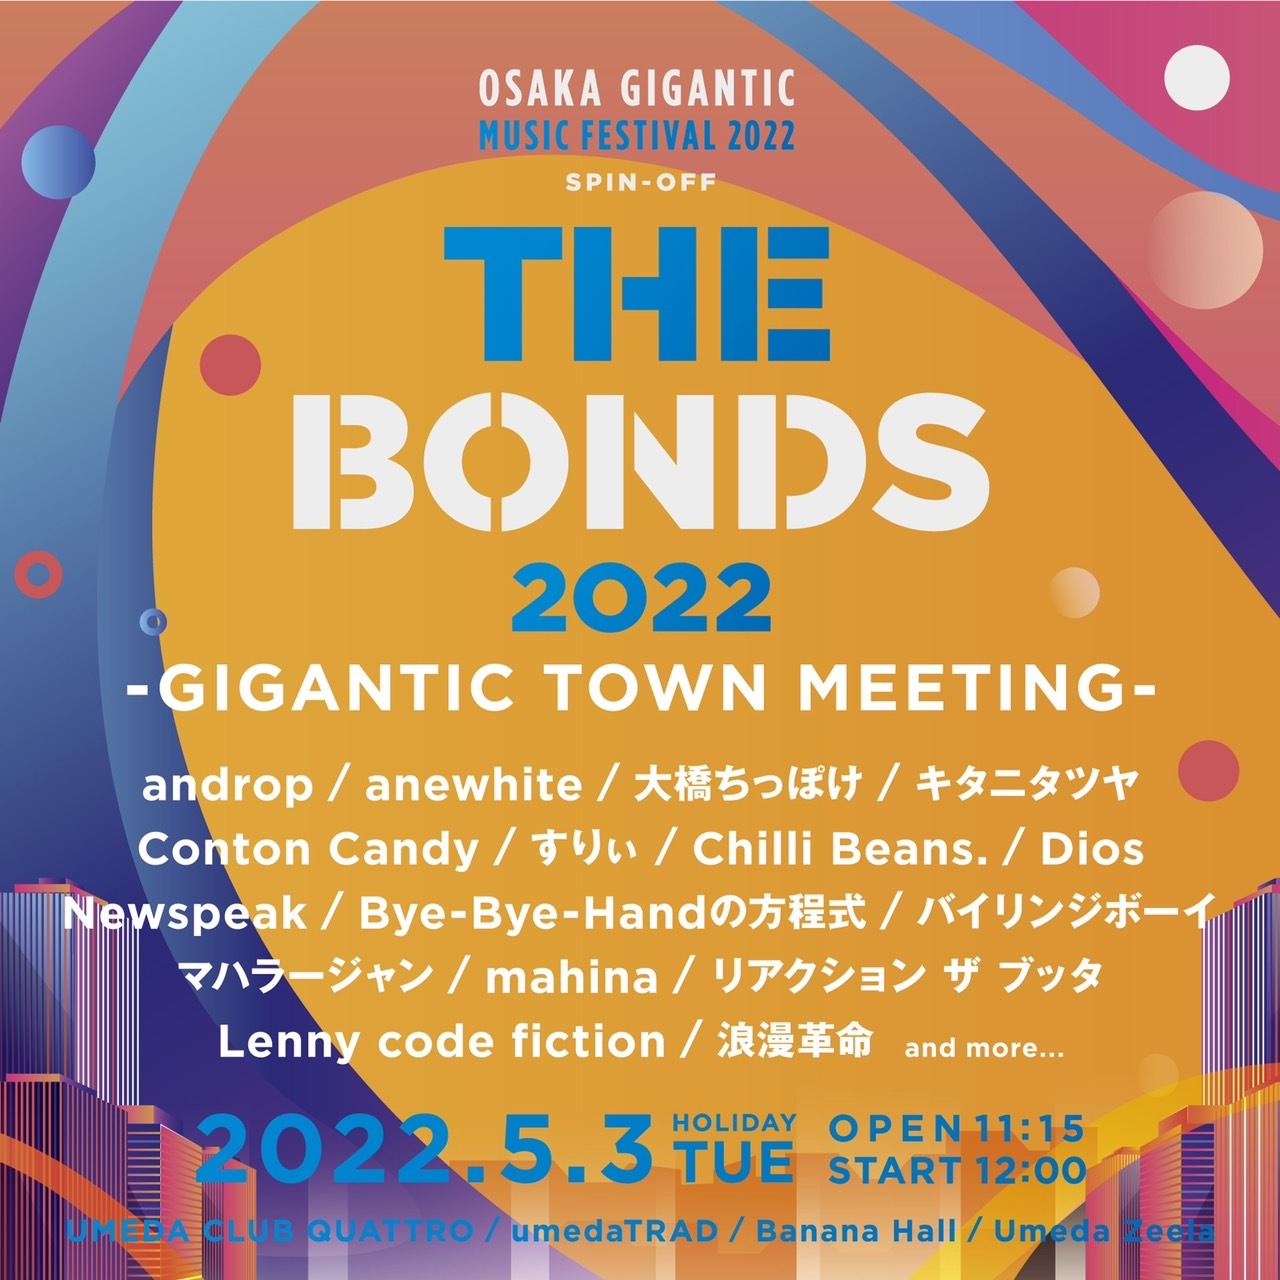 OSAKA GIGANTIC MUSIC FESTIVAL 2022 SPIN-OFF 『THE BONDS 2022 -GIGANTIC TOWN MEETING-』